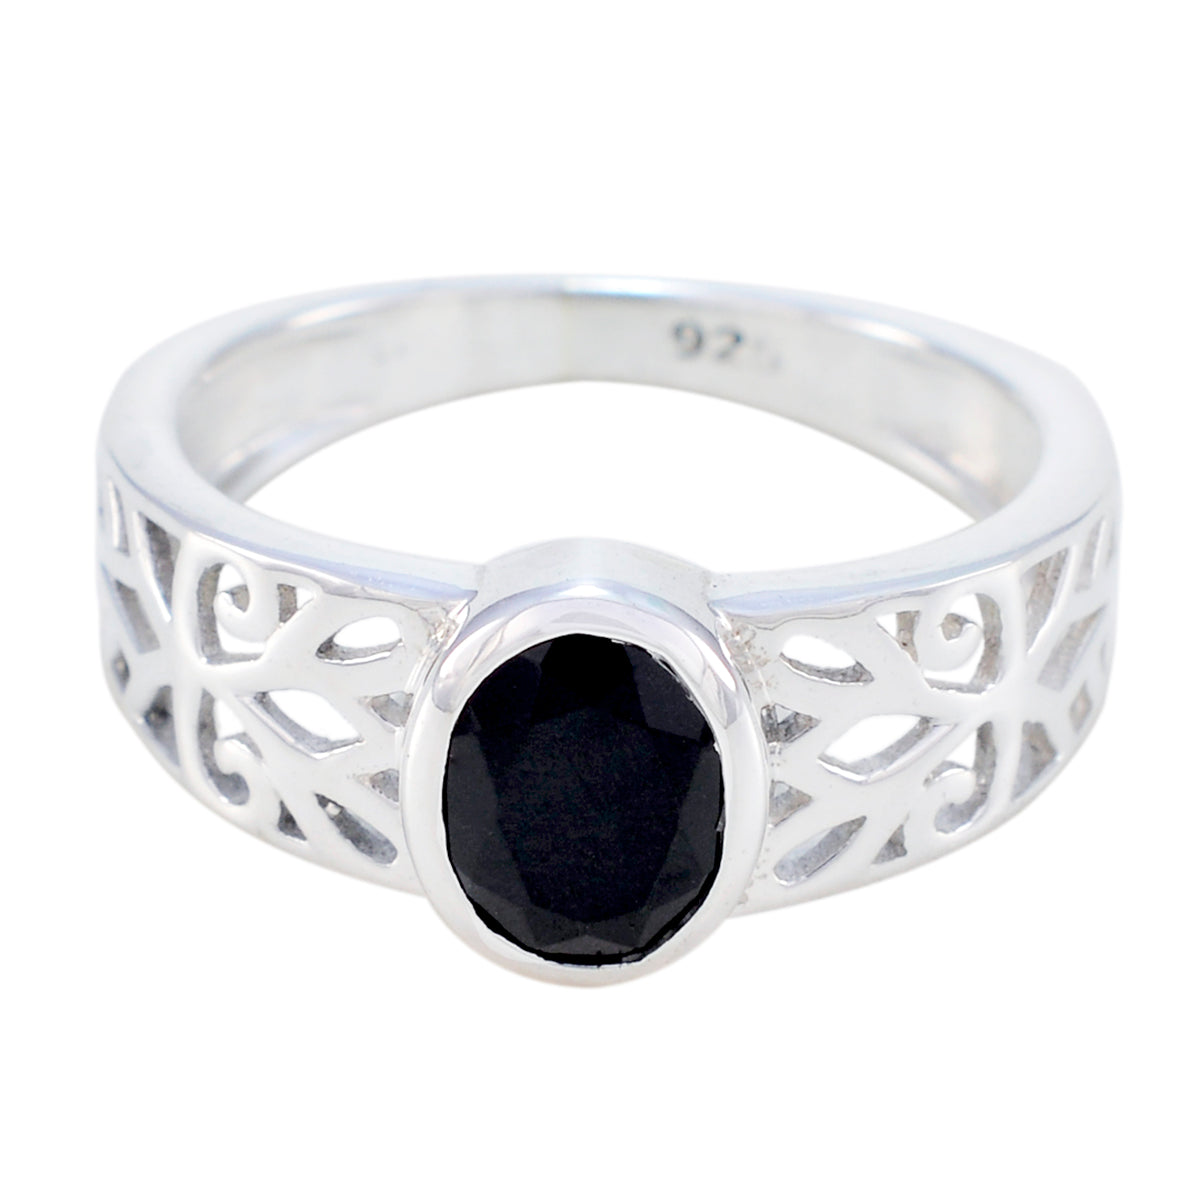 Riyo Pretty Gem Black Onyx 925 Sterling Silver Rings Horse Jewelry